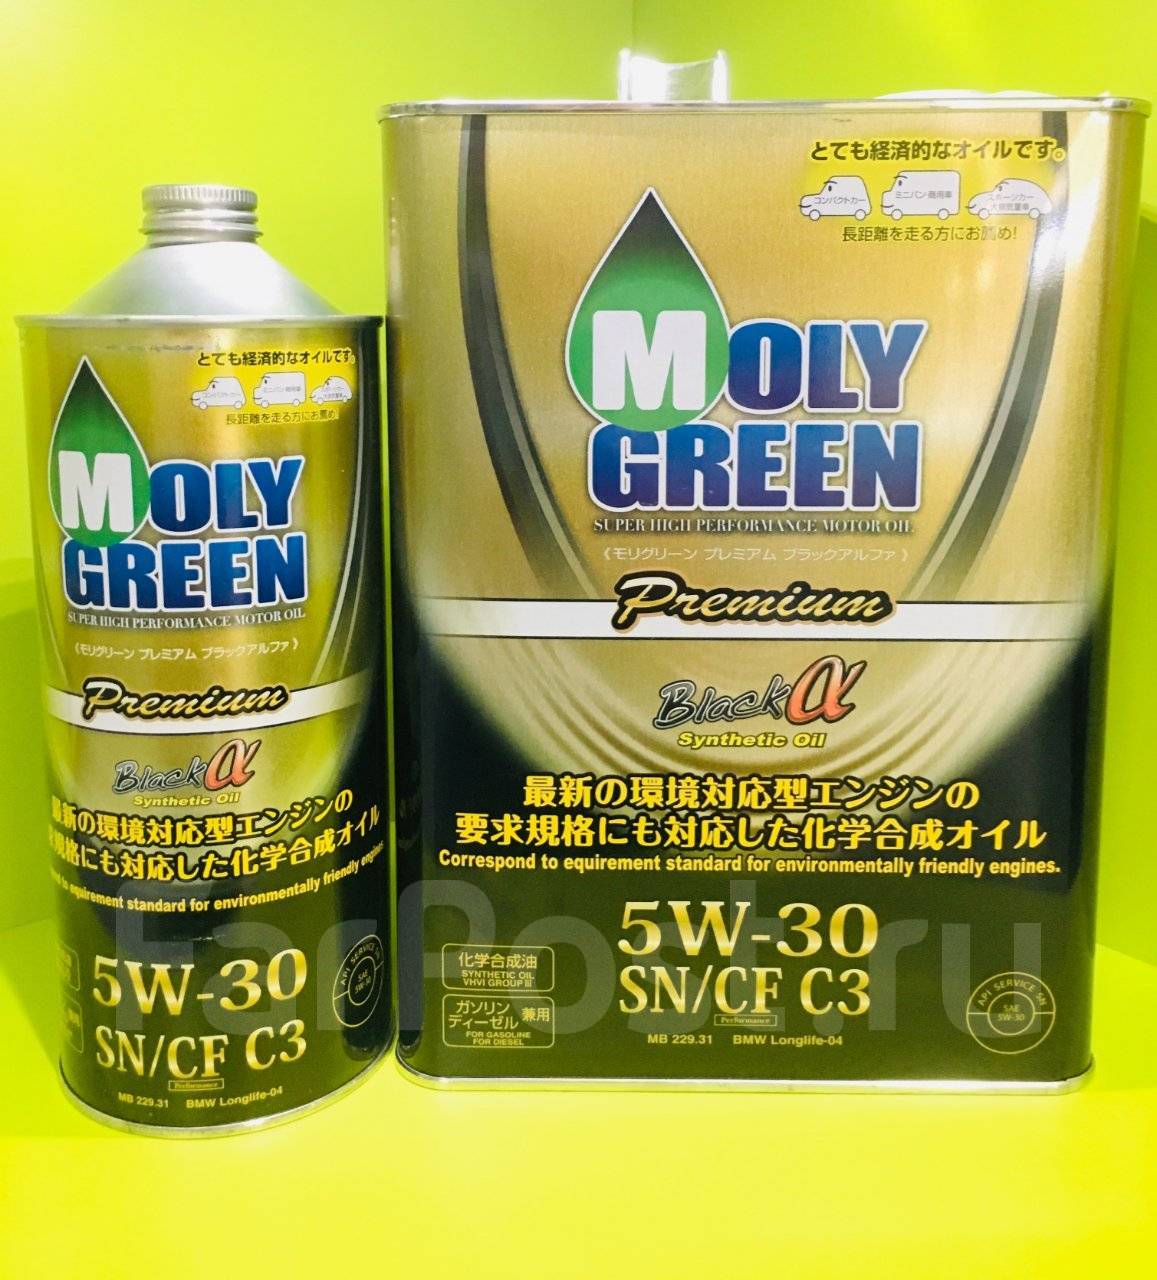 Моли грин 5w30 купить. Масло моли Грин 5w30 премиум. Масло моли Грин 5w30 дизель. Moly Green Black SN/gf-5 5w-30 4л. Moly Green 5w30 Premium Авторусь.